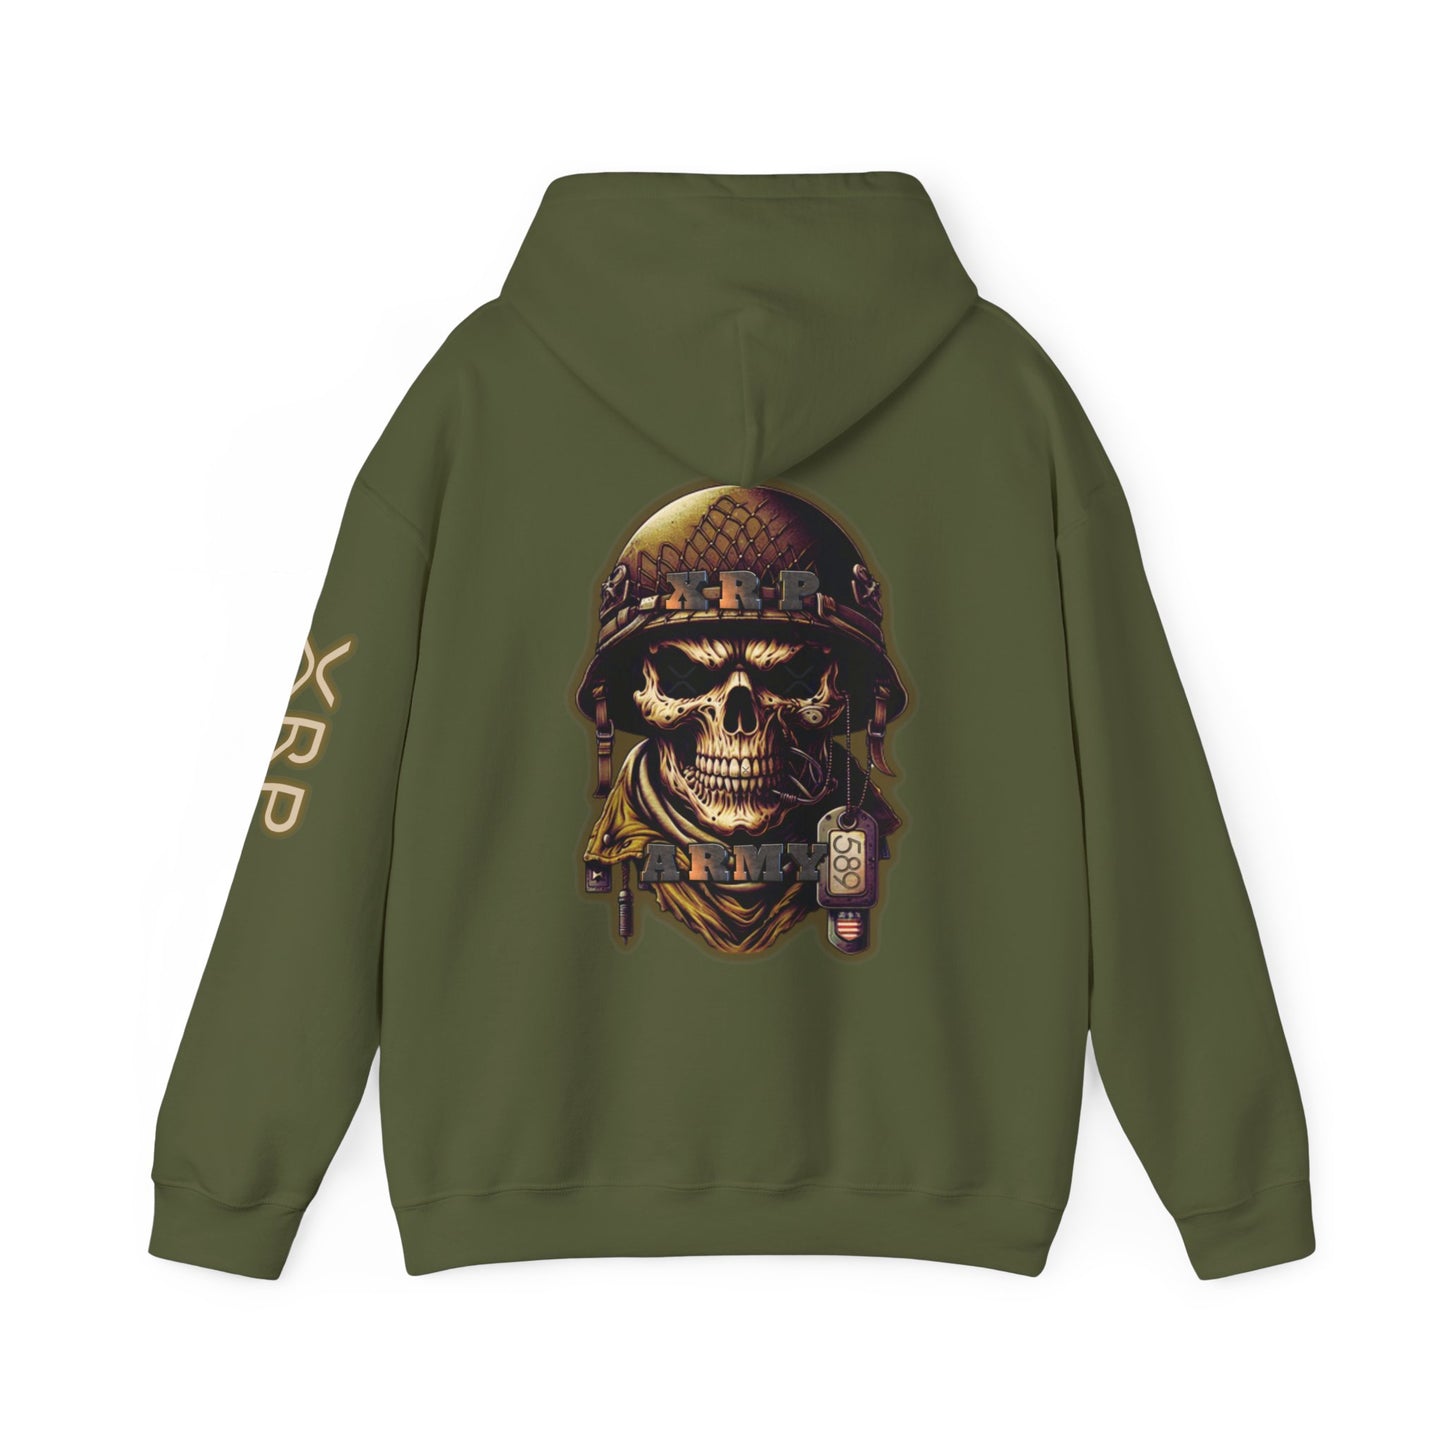 'XRP ARMY' Hooded Sweatshirt - Unisex Crypto Apparel